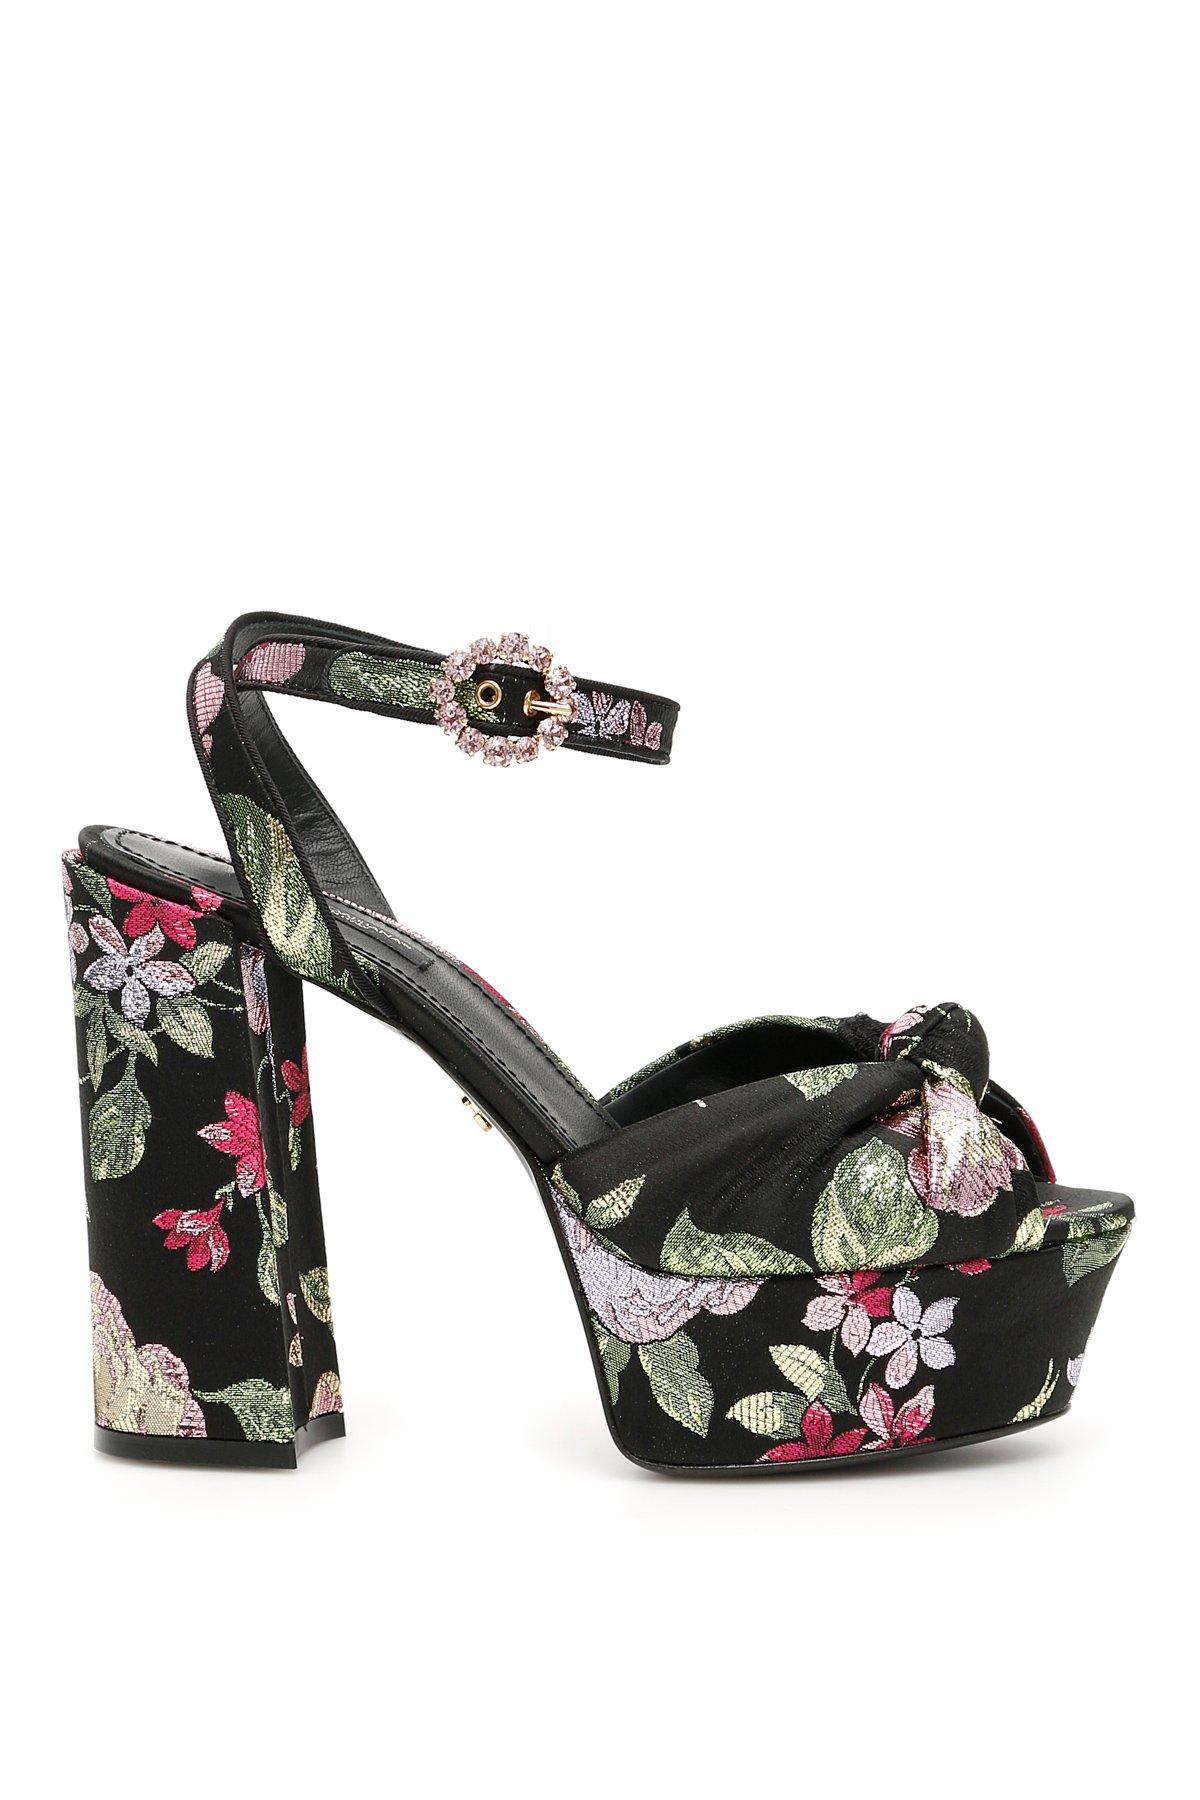 Dolce & Gabbana Keira Platform Sandals - Lyst